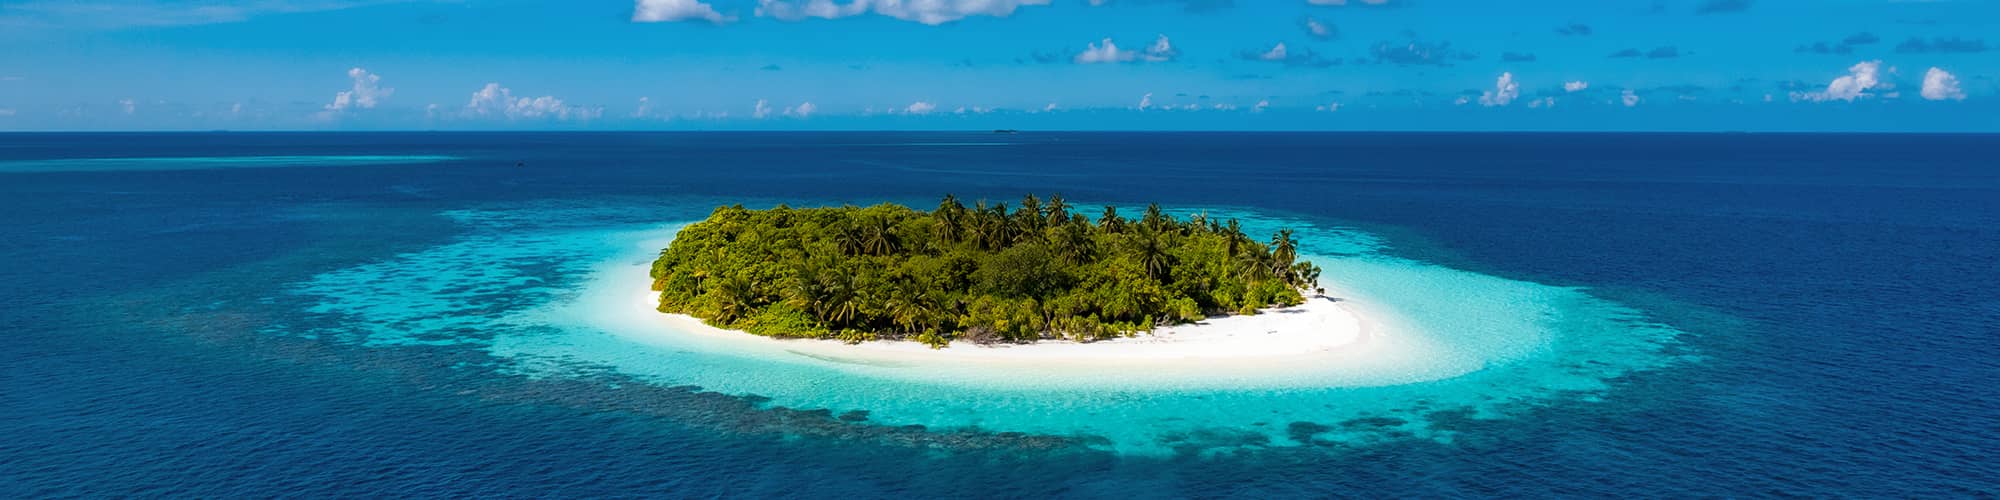 Trek aux Maldives : snorkeling, randonnée et voyage  © Ishan @seefromthesky